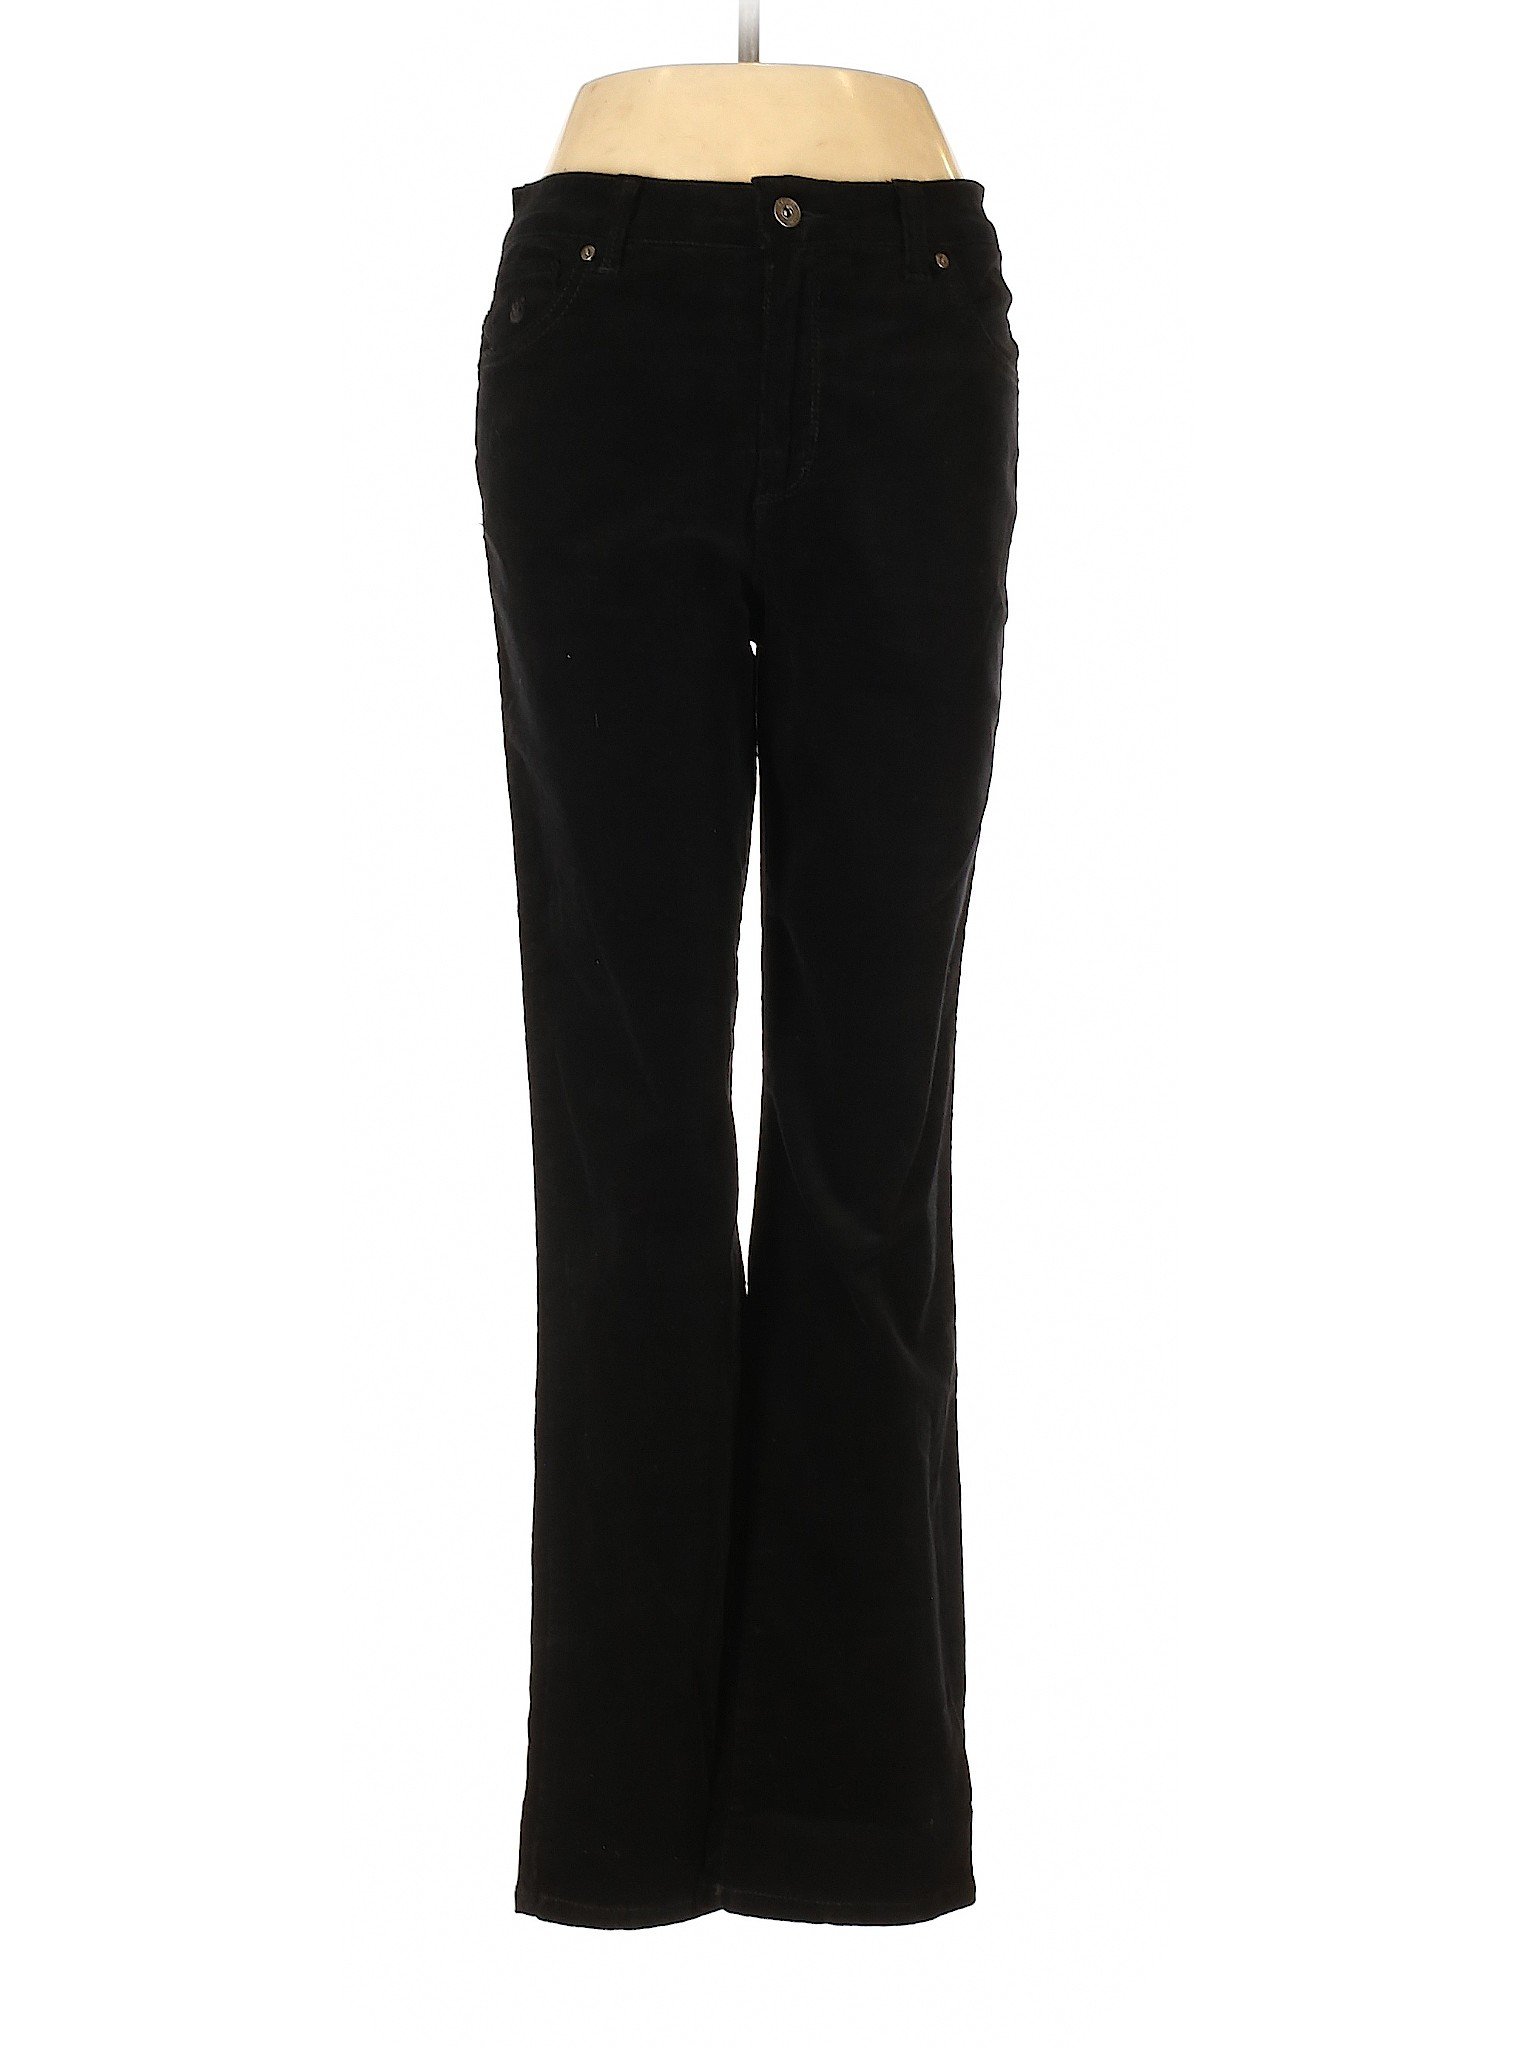 Gloria Vanderbilt Women Black Velour Pants 6 | eBay